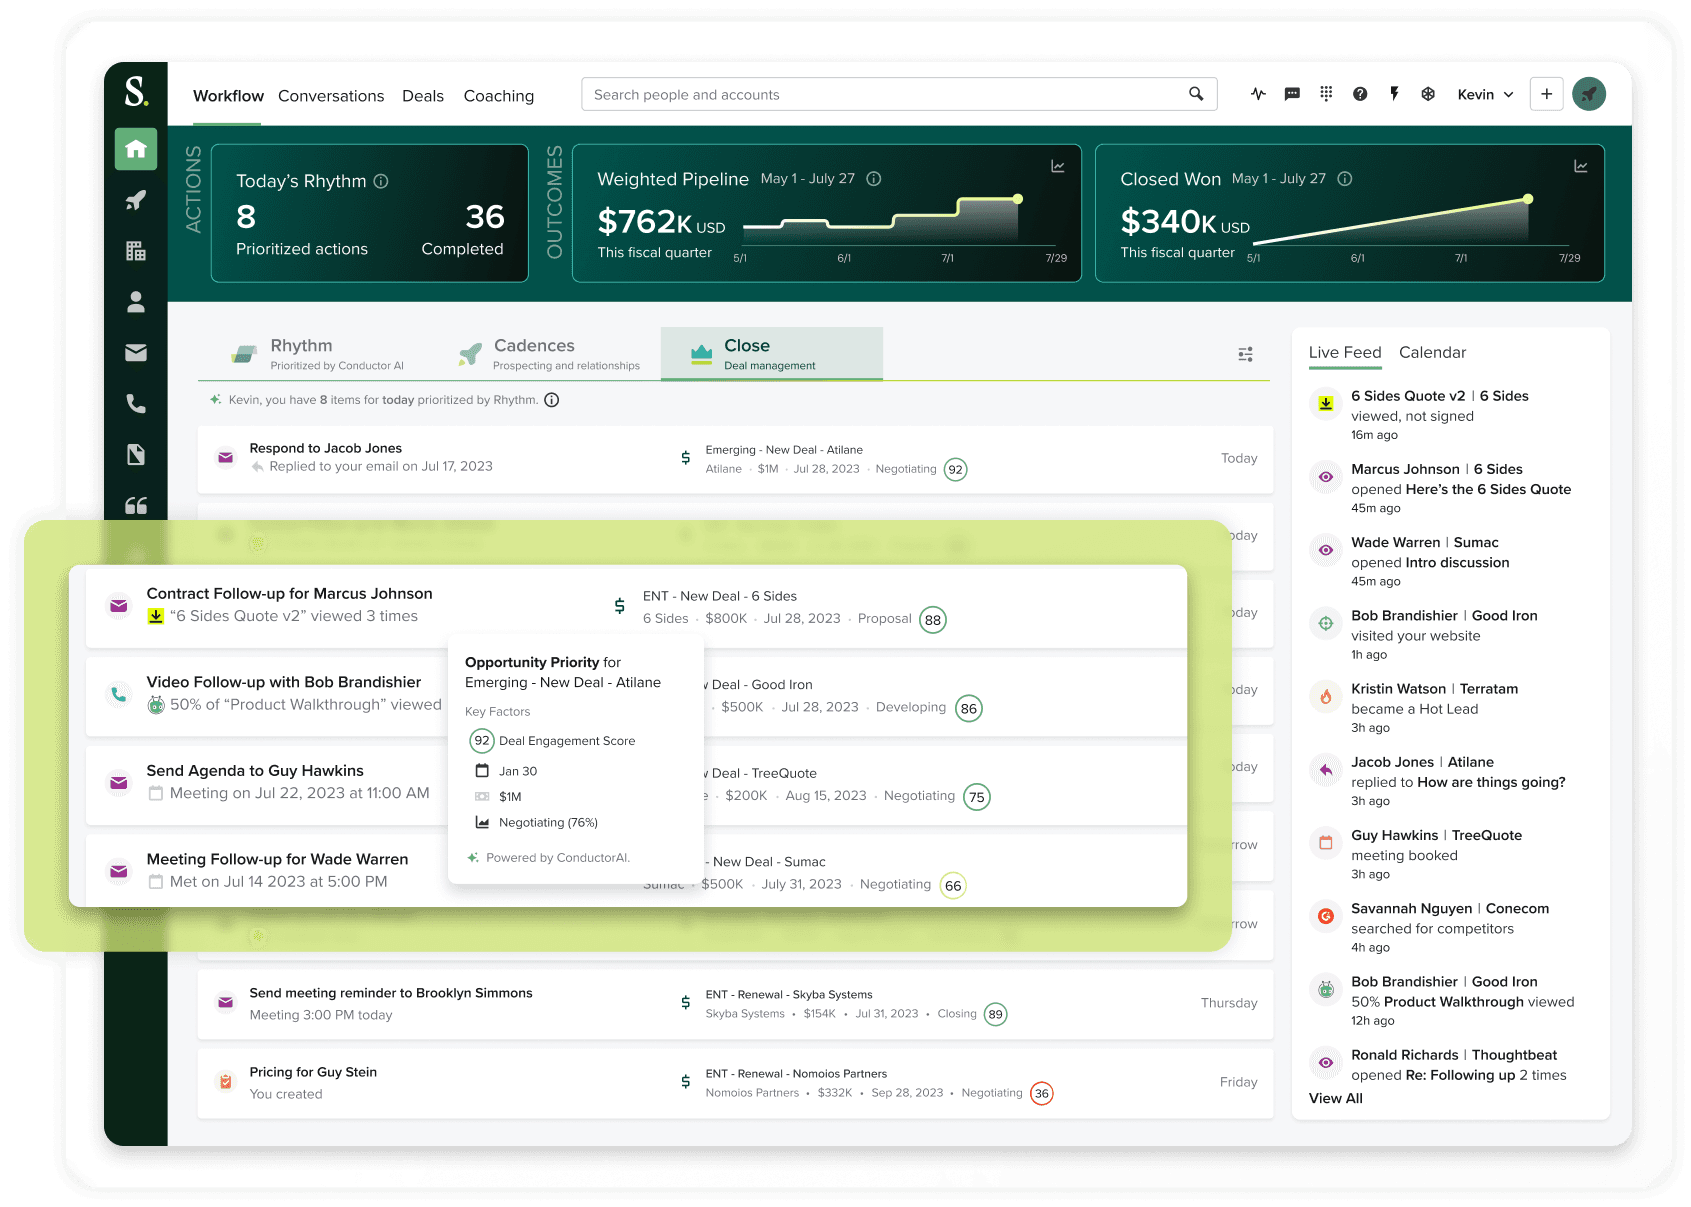 Screenshot of deals section of the Salesloft platform